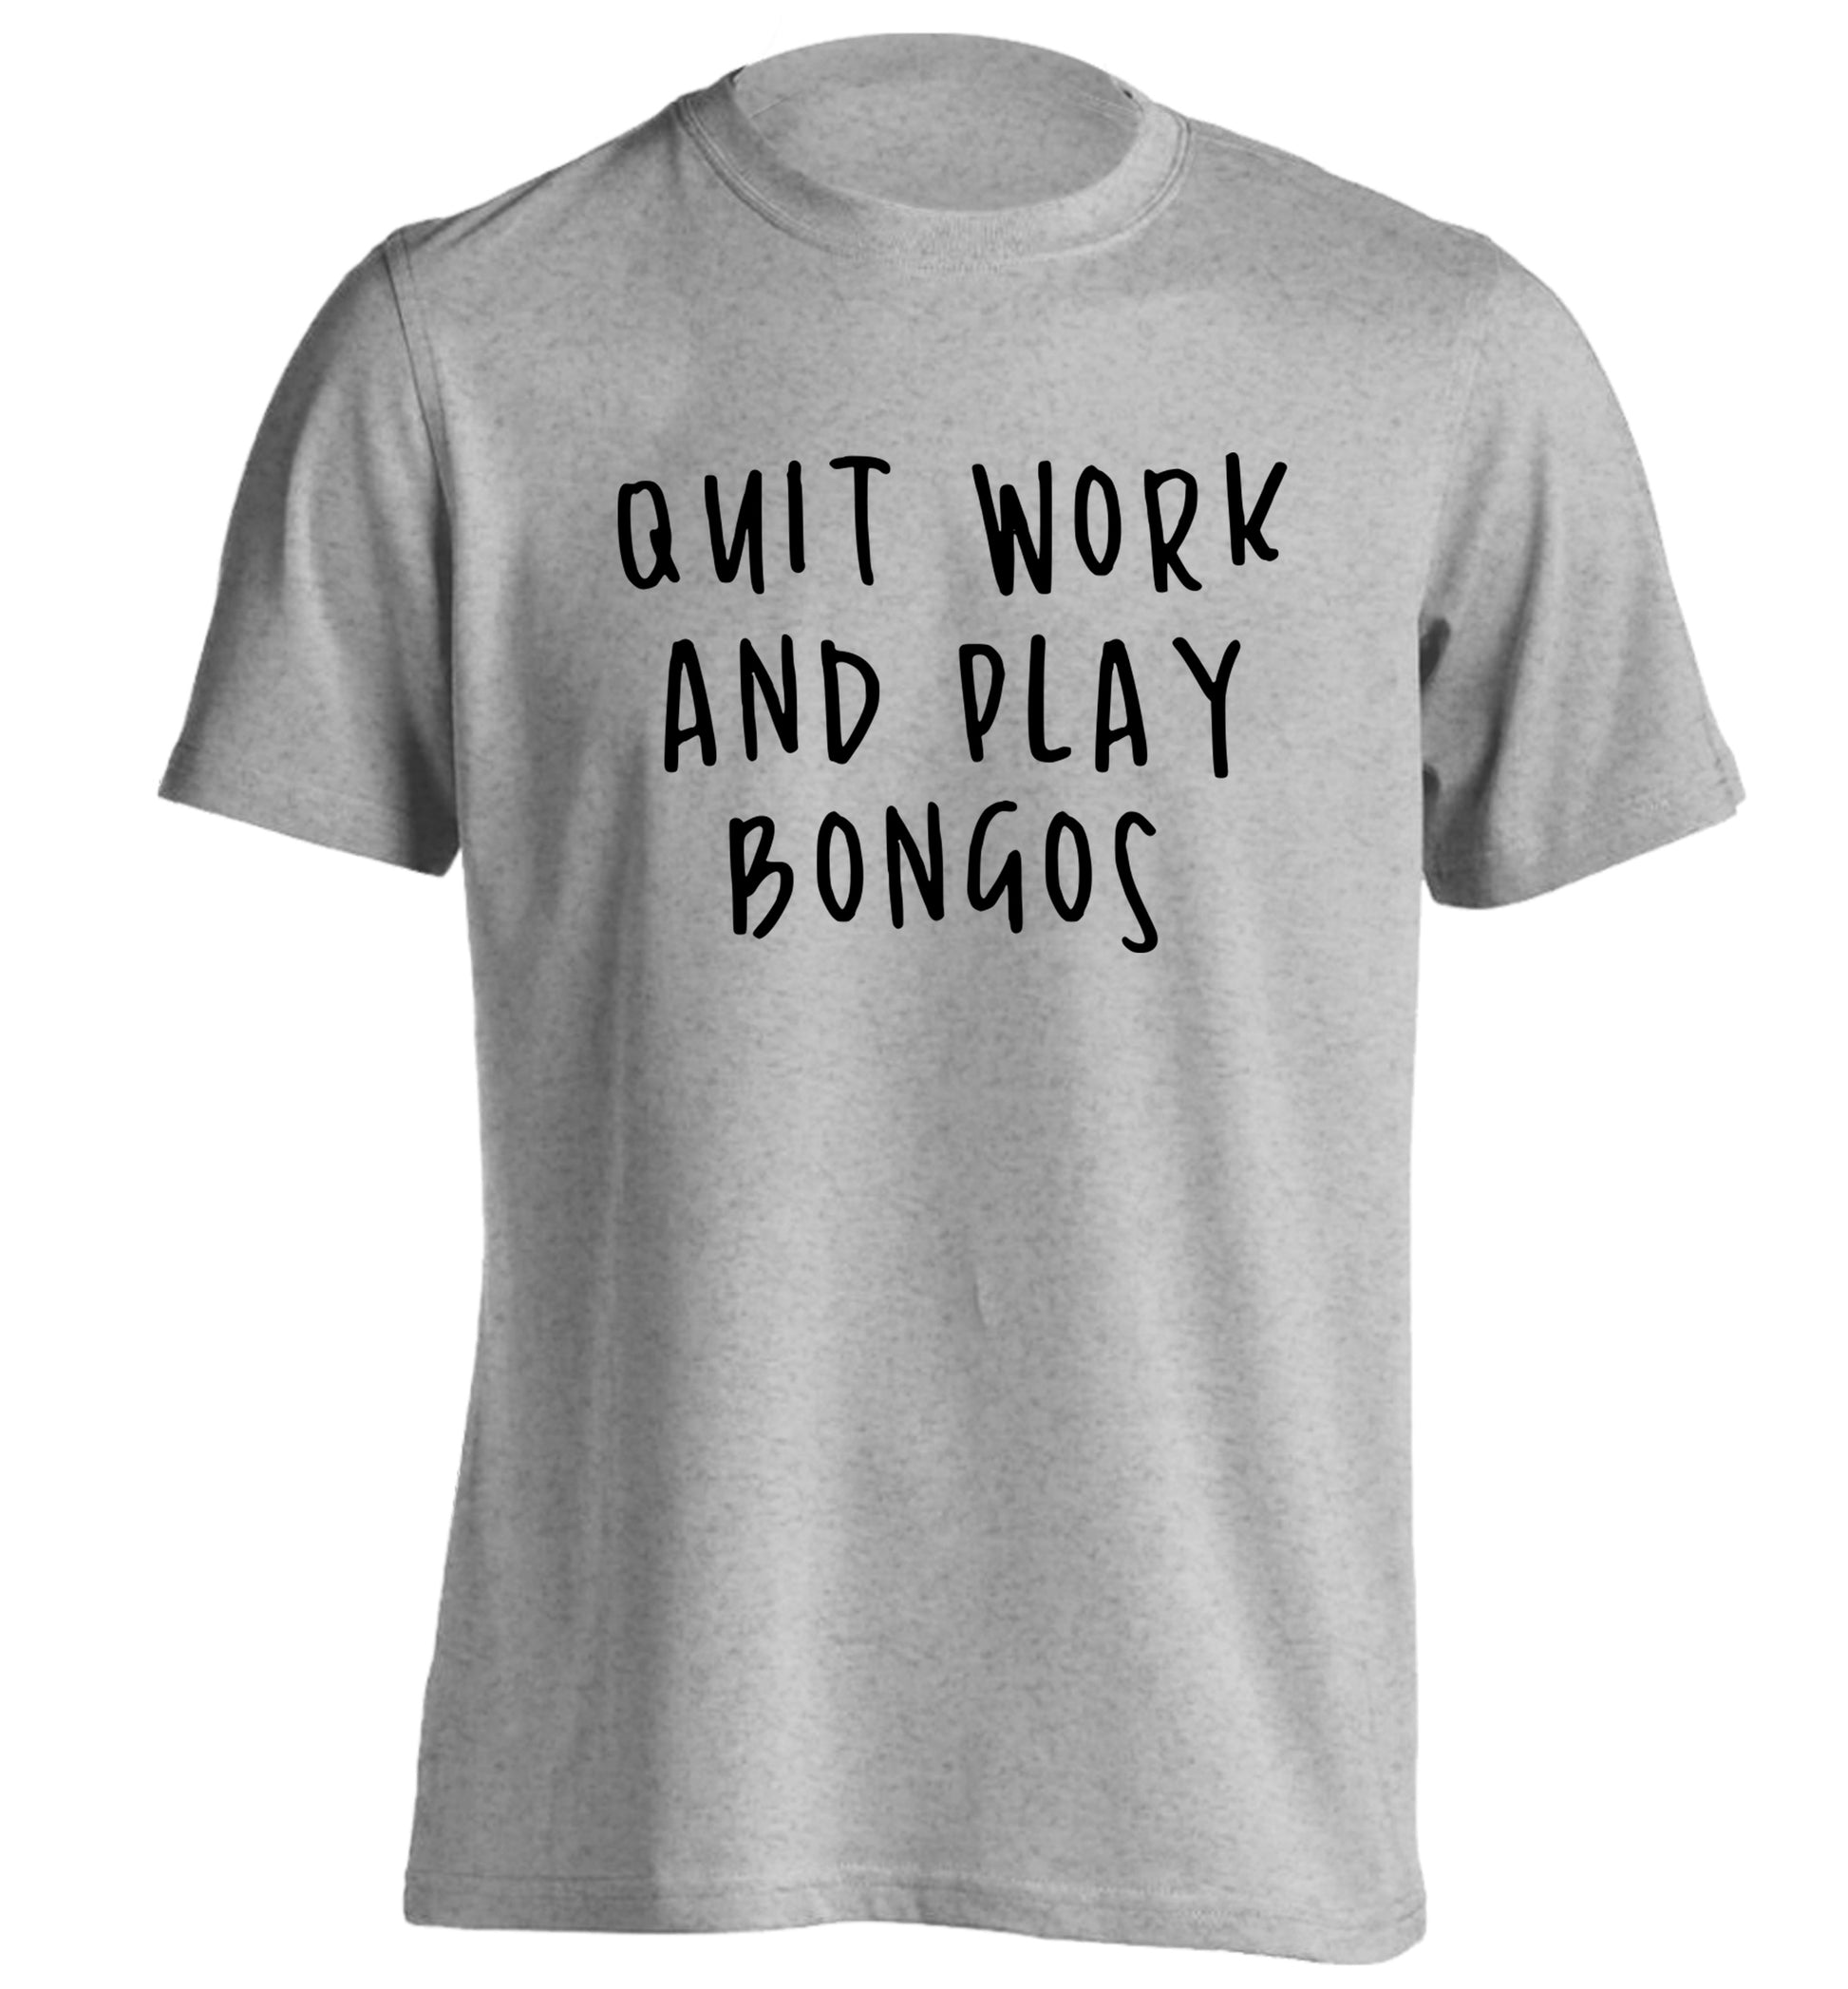 Quit work and play bongos adults unisex grey Tshirt 2XL